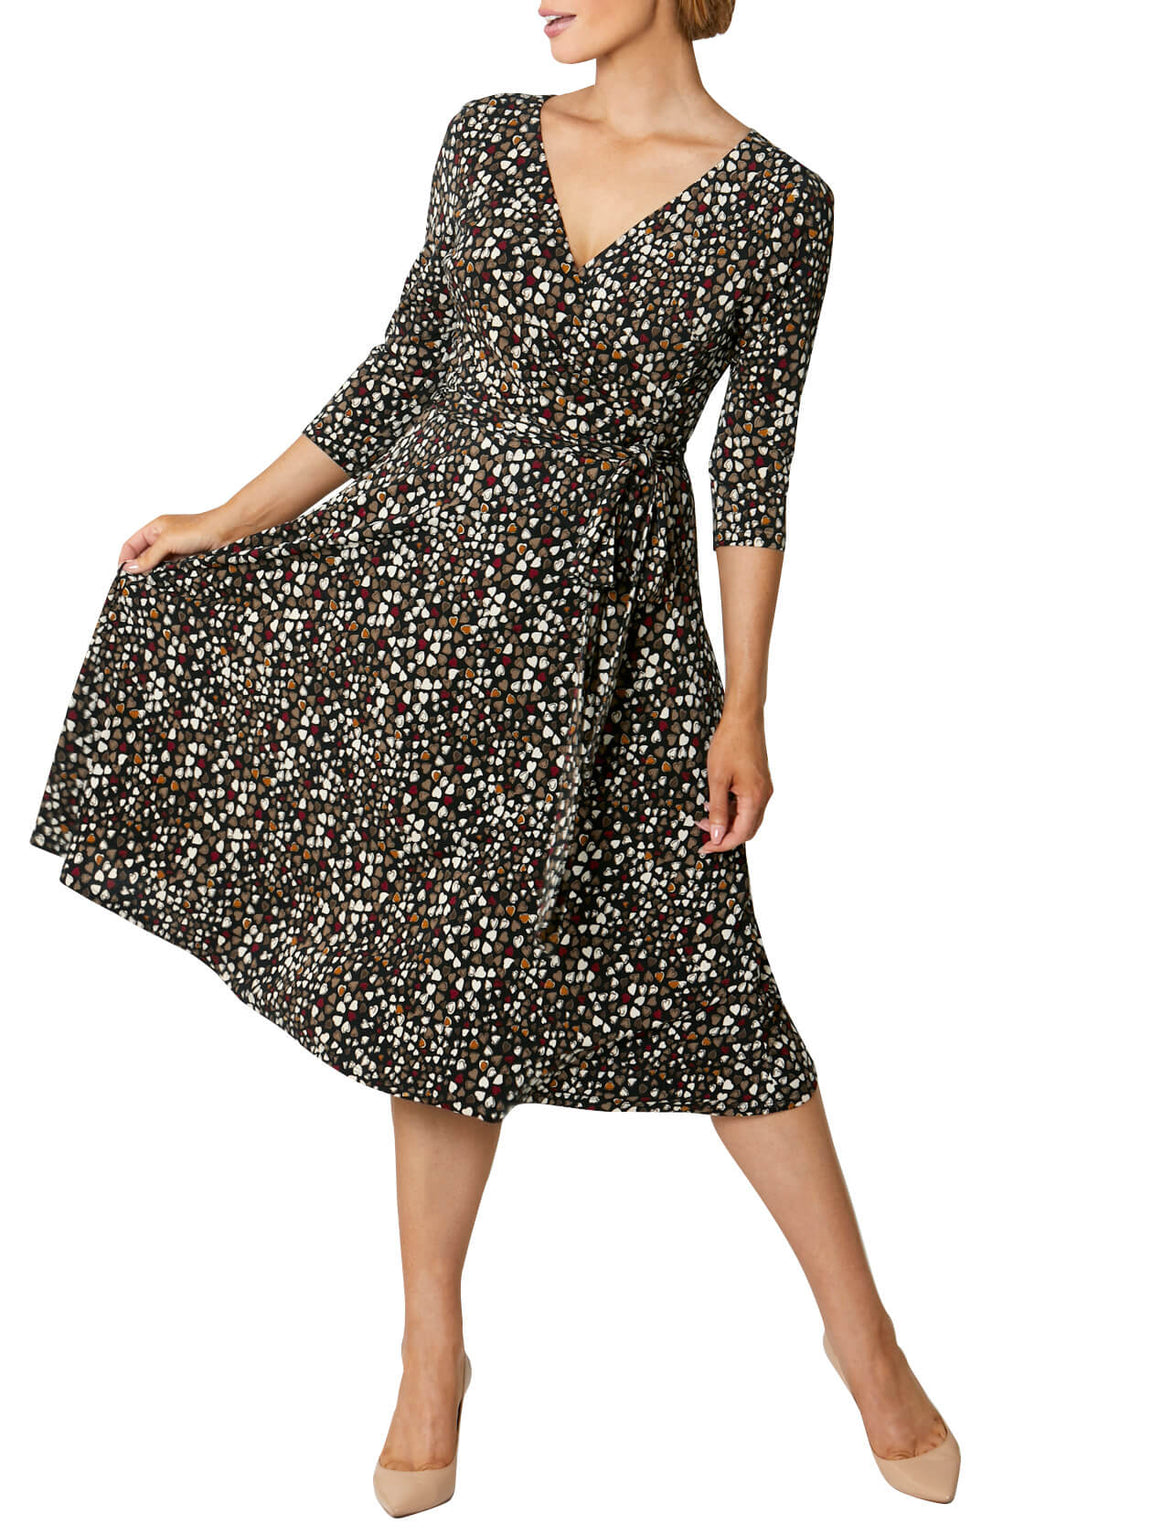 Jersey Dresses Online Australia | Stylish Jersey Dresses for Sale ...